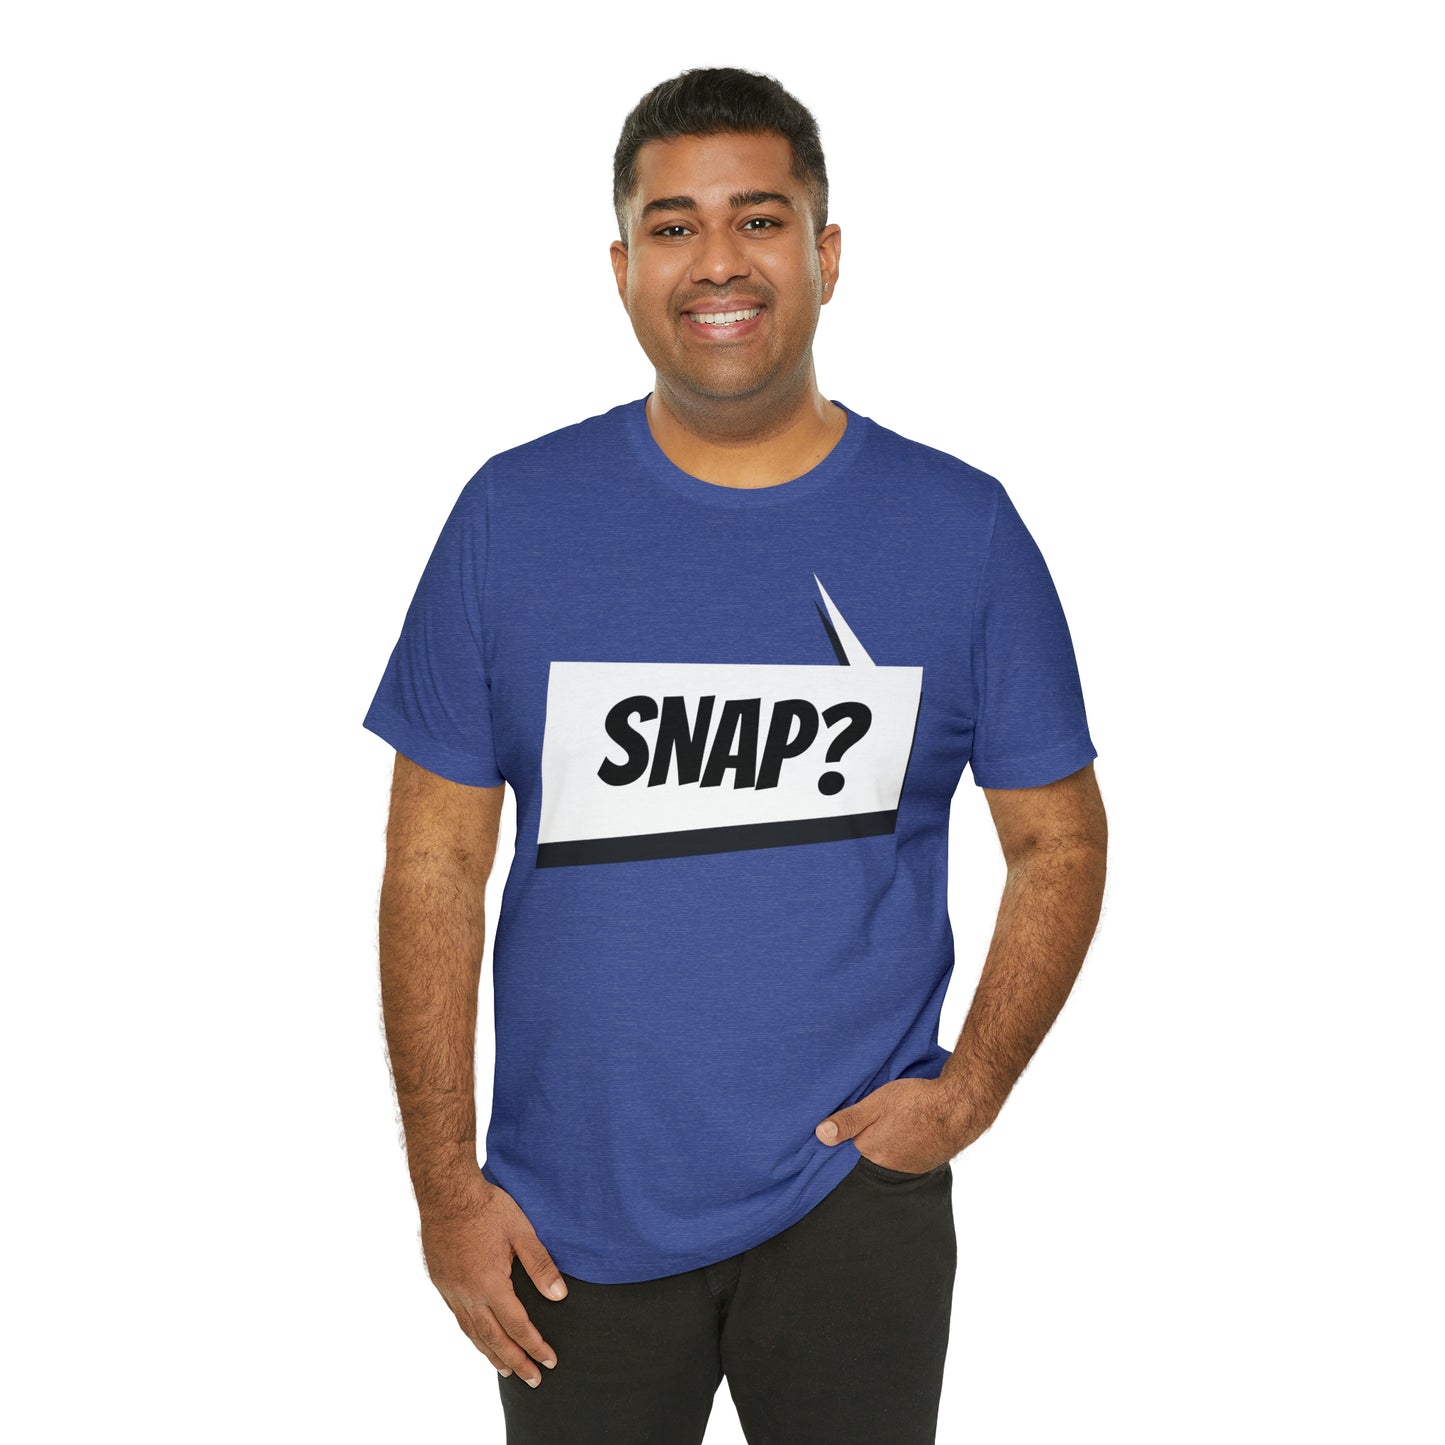 "snap?" Marvel Snap Unisex Jersey Short Sleeve Tee